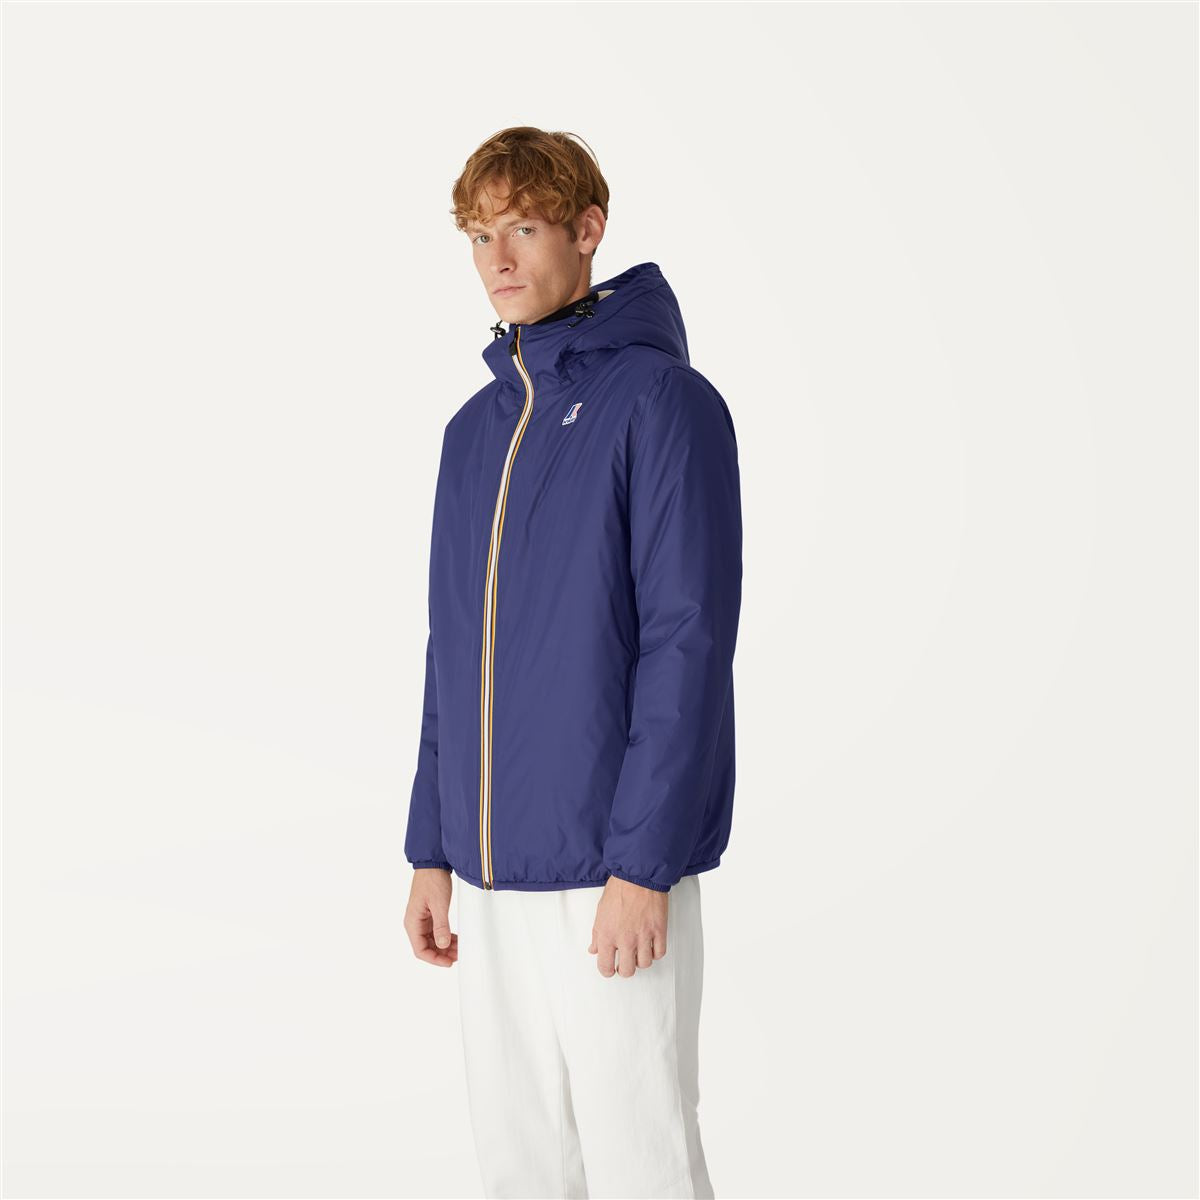 Claude Orsetto - Unisex Sherpa Lined Waterproof Full Zip Rain Jacket in Blue Medieval